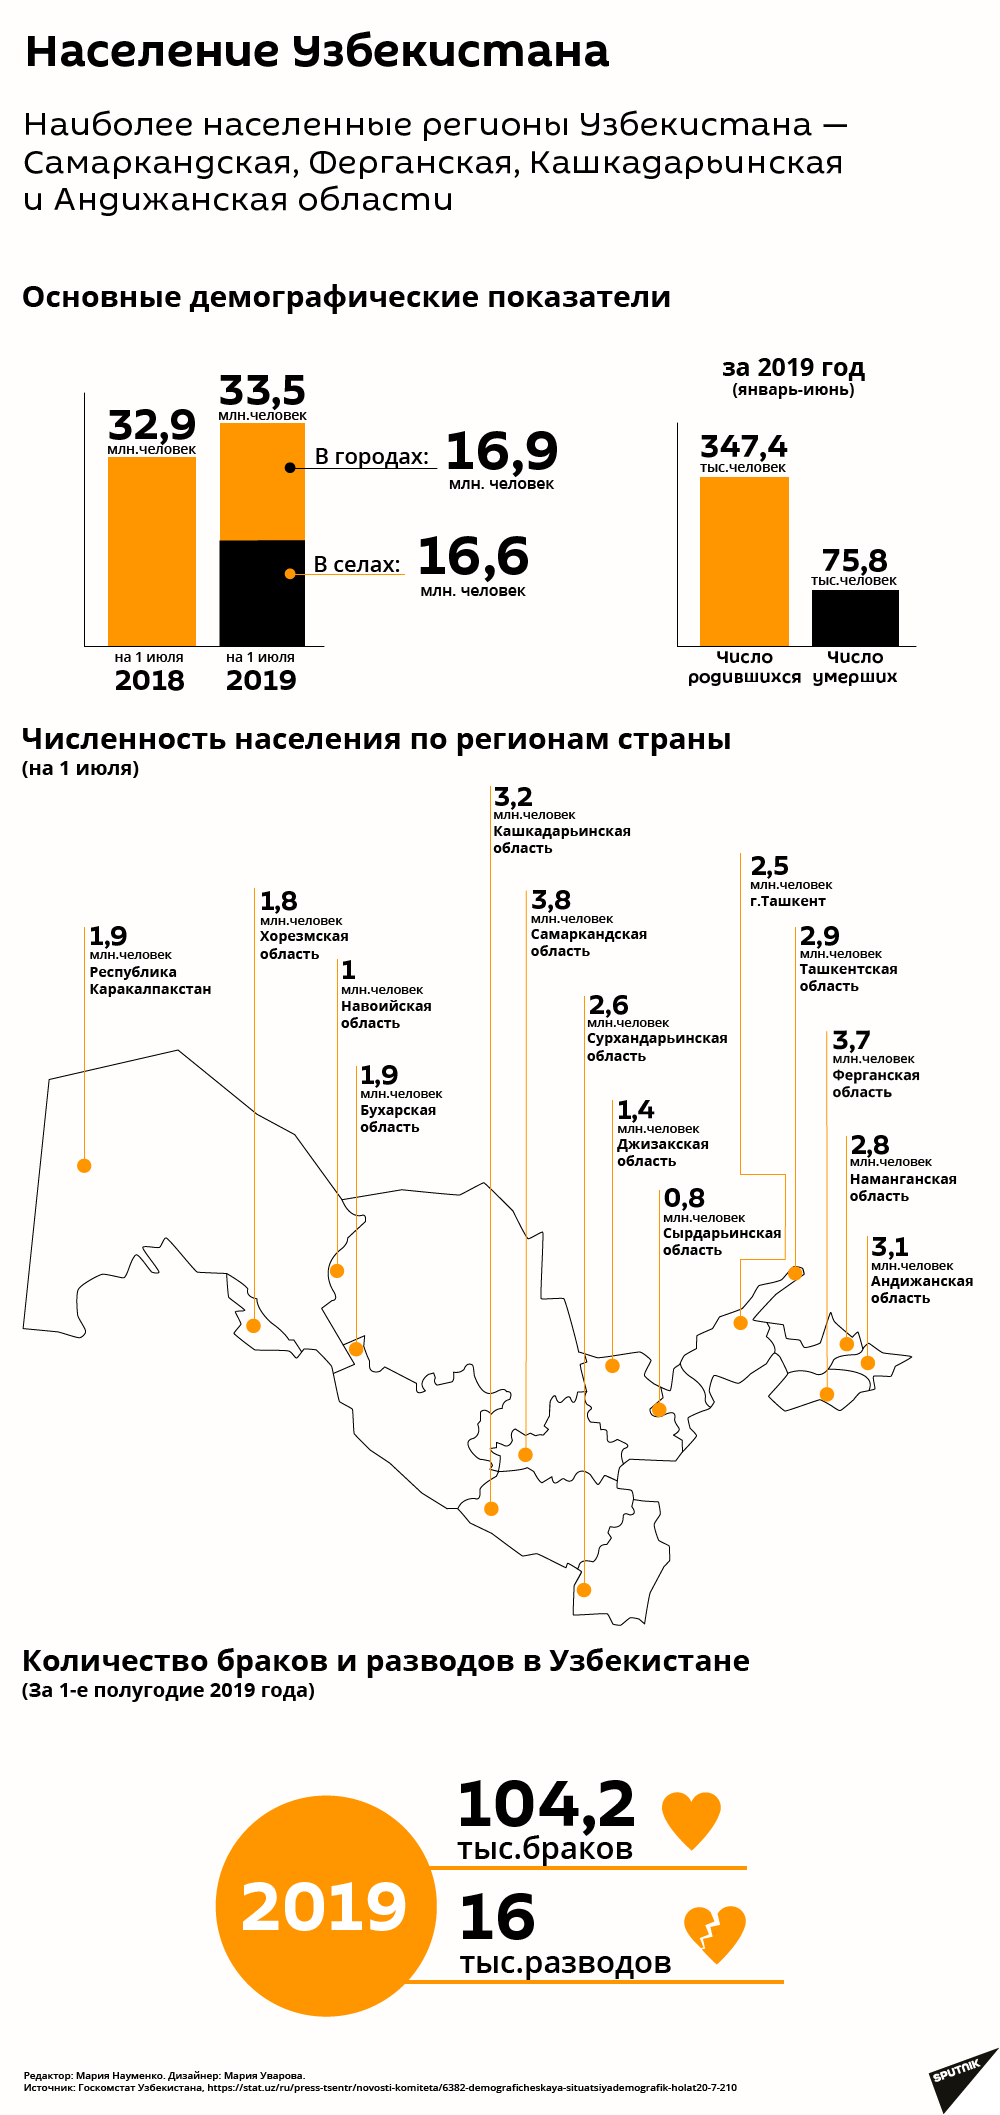 Население Узбекистана 2019 год - Sputnik Узбекистан